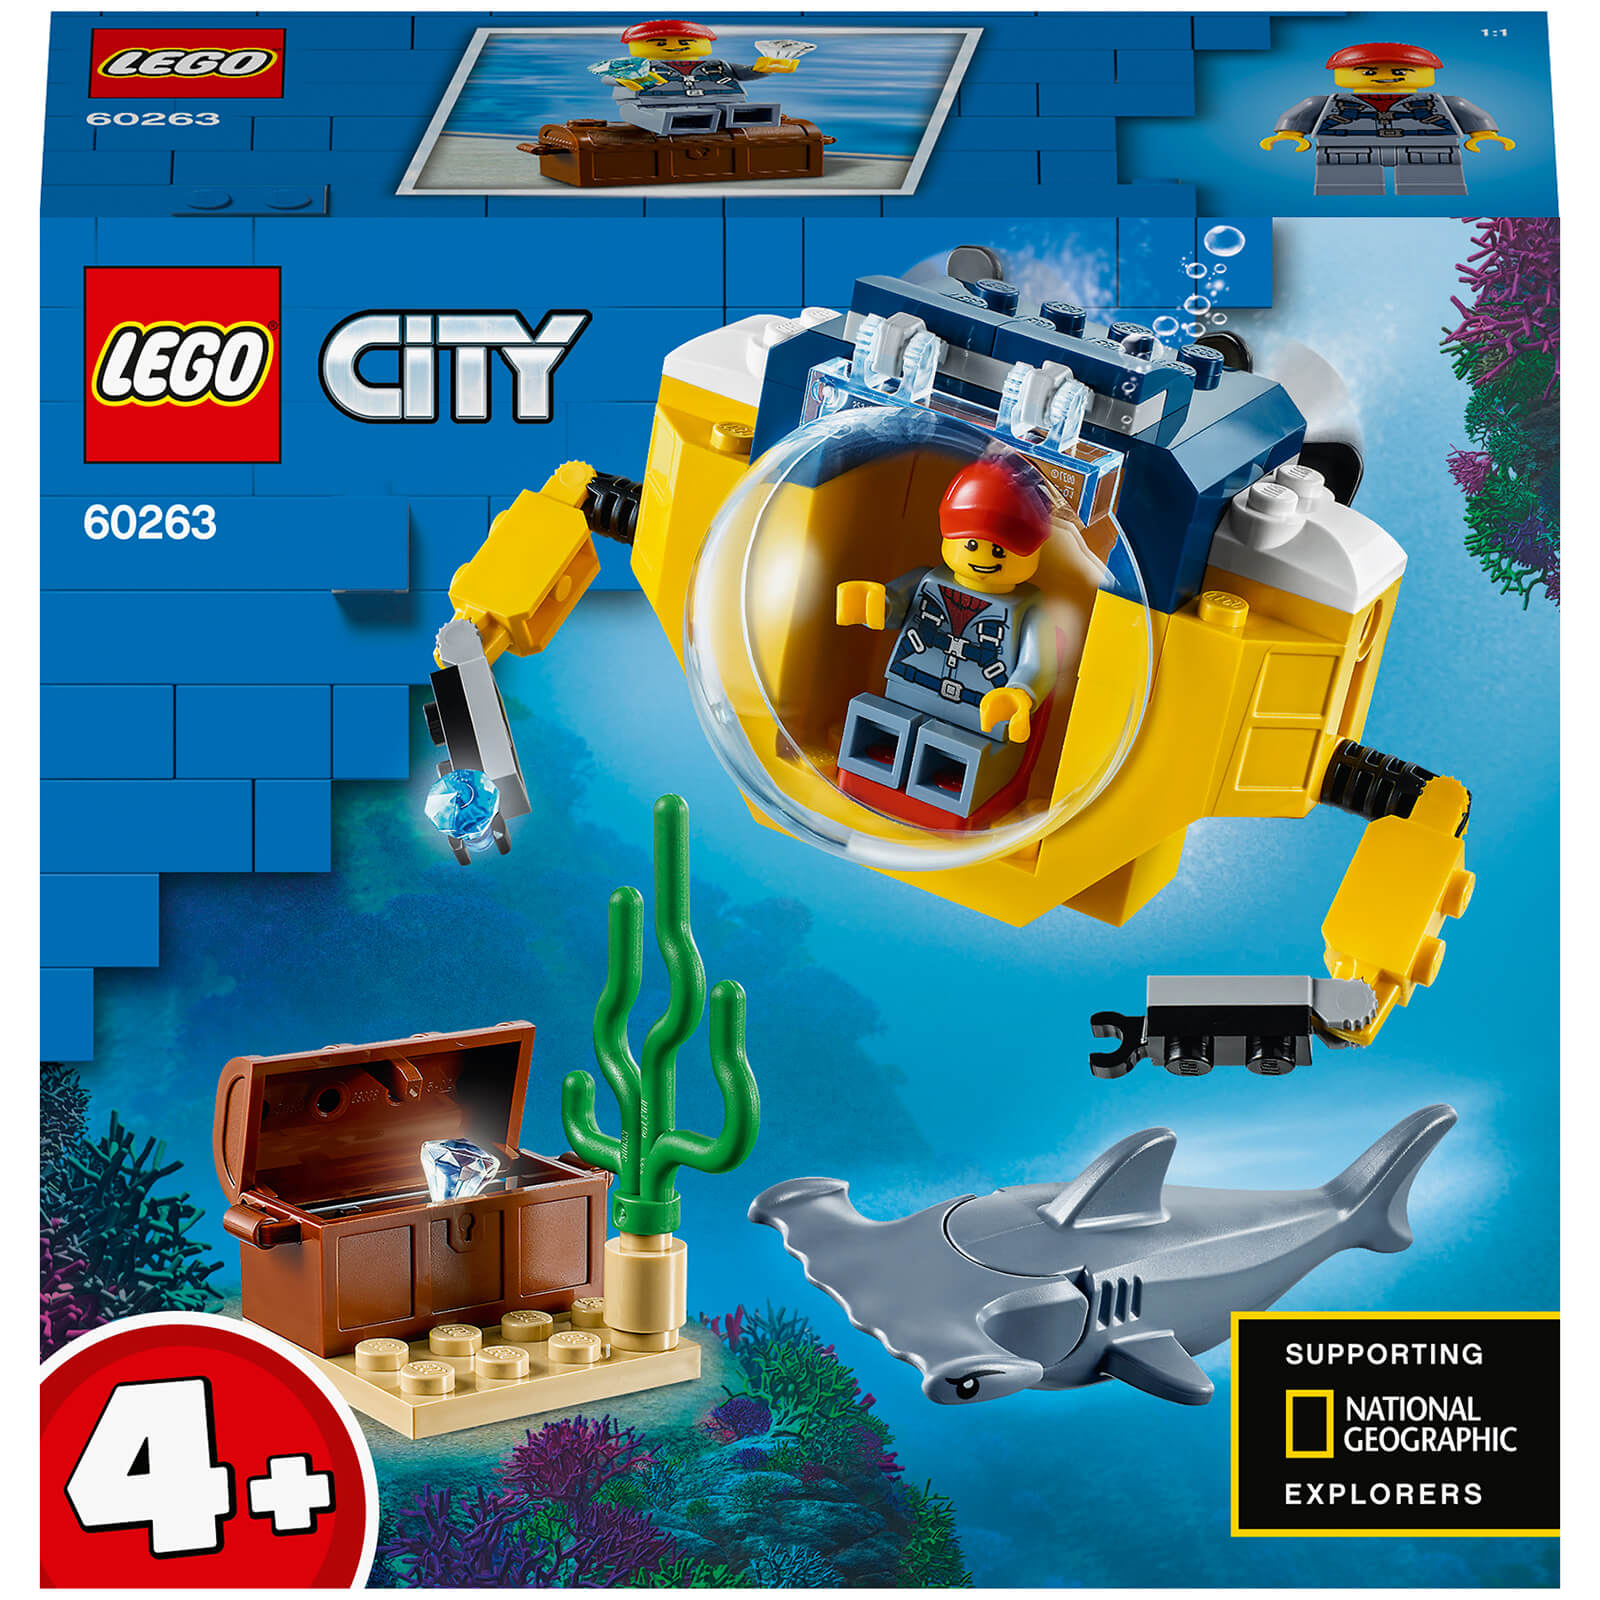 LEGO City: 4+ Ocean Mini-Submarine Deep Sea Set (60263)